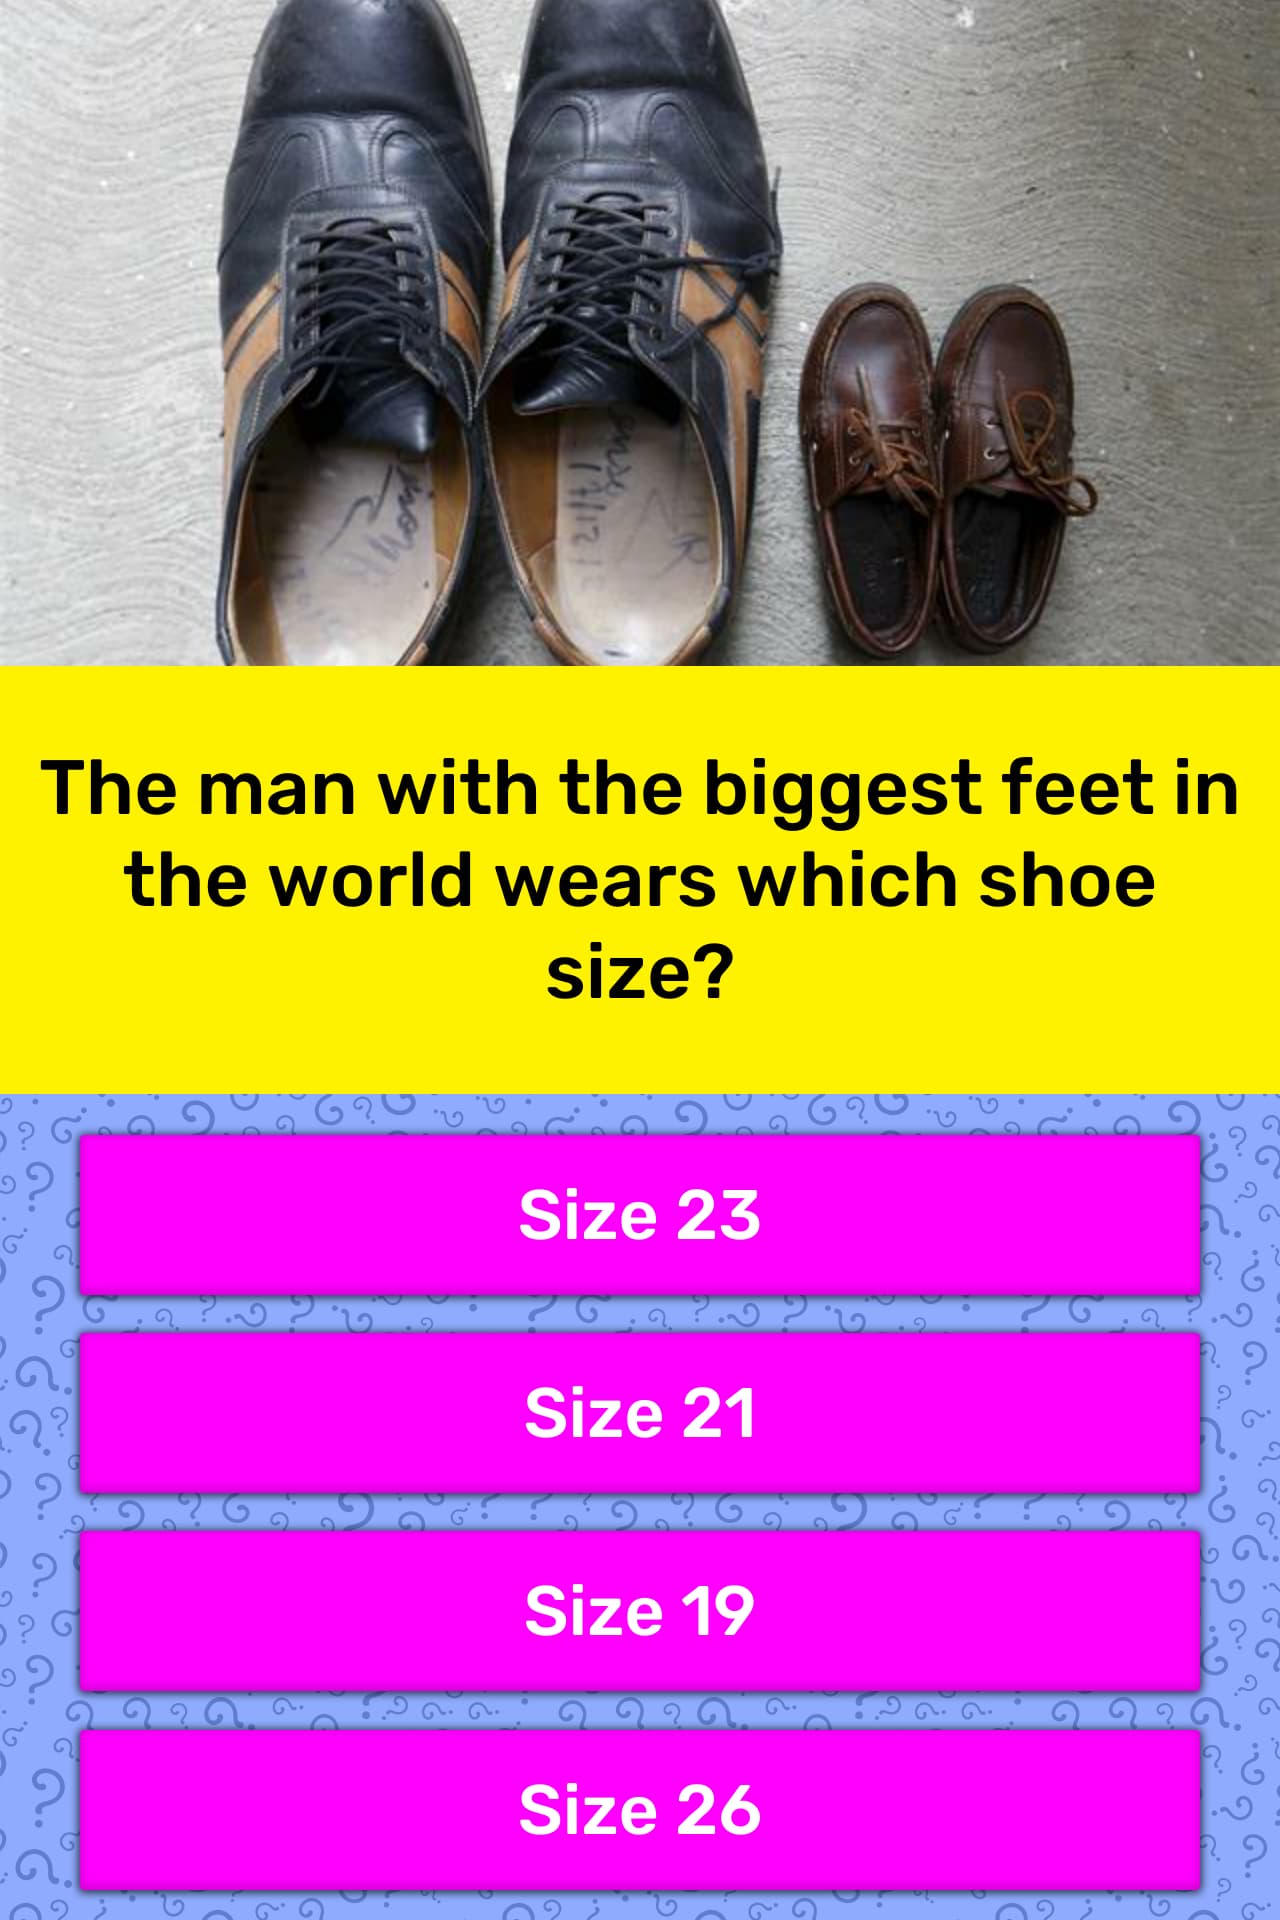 size 26 shoe size